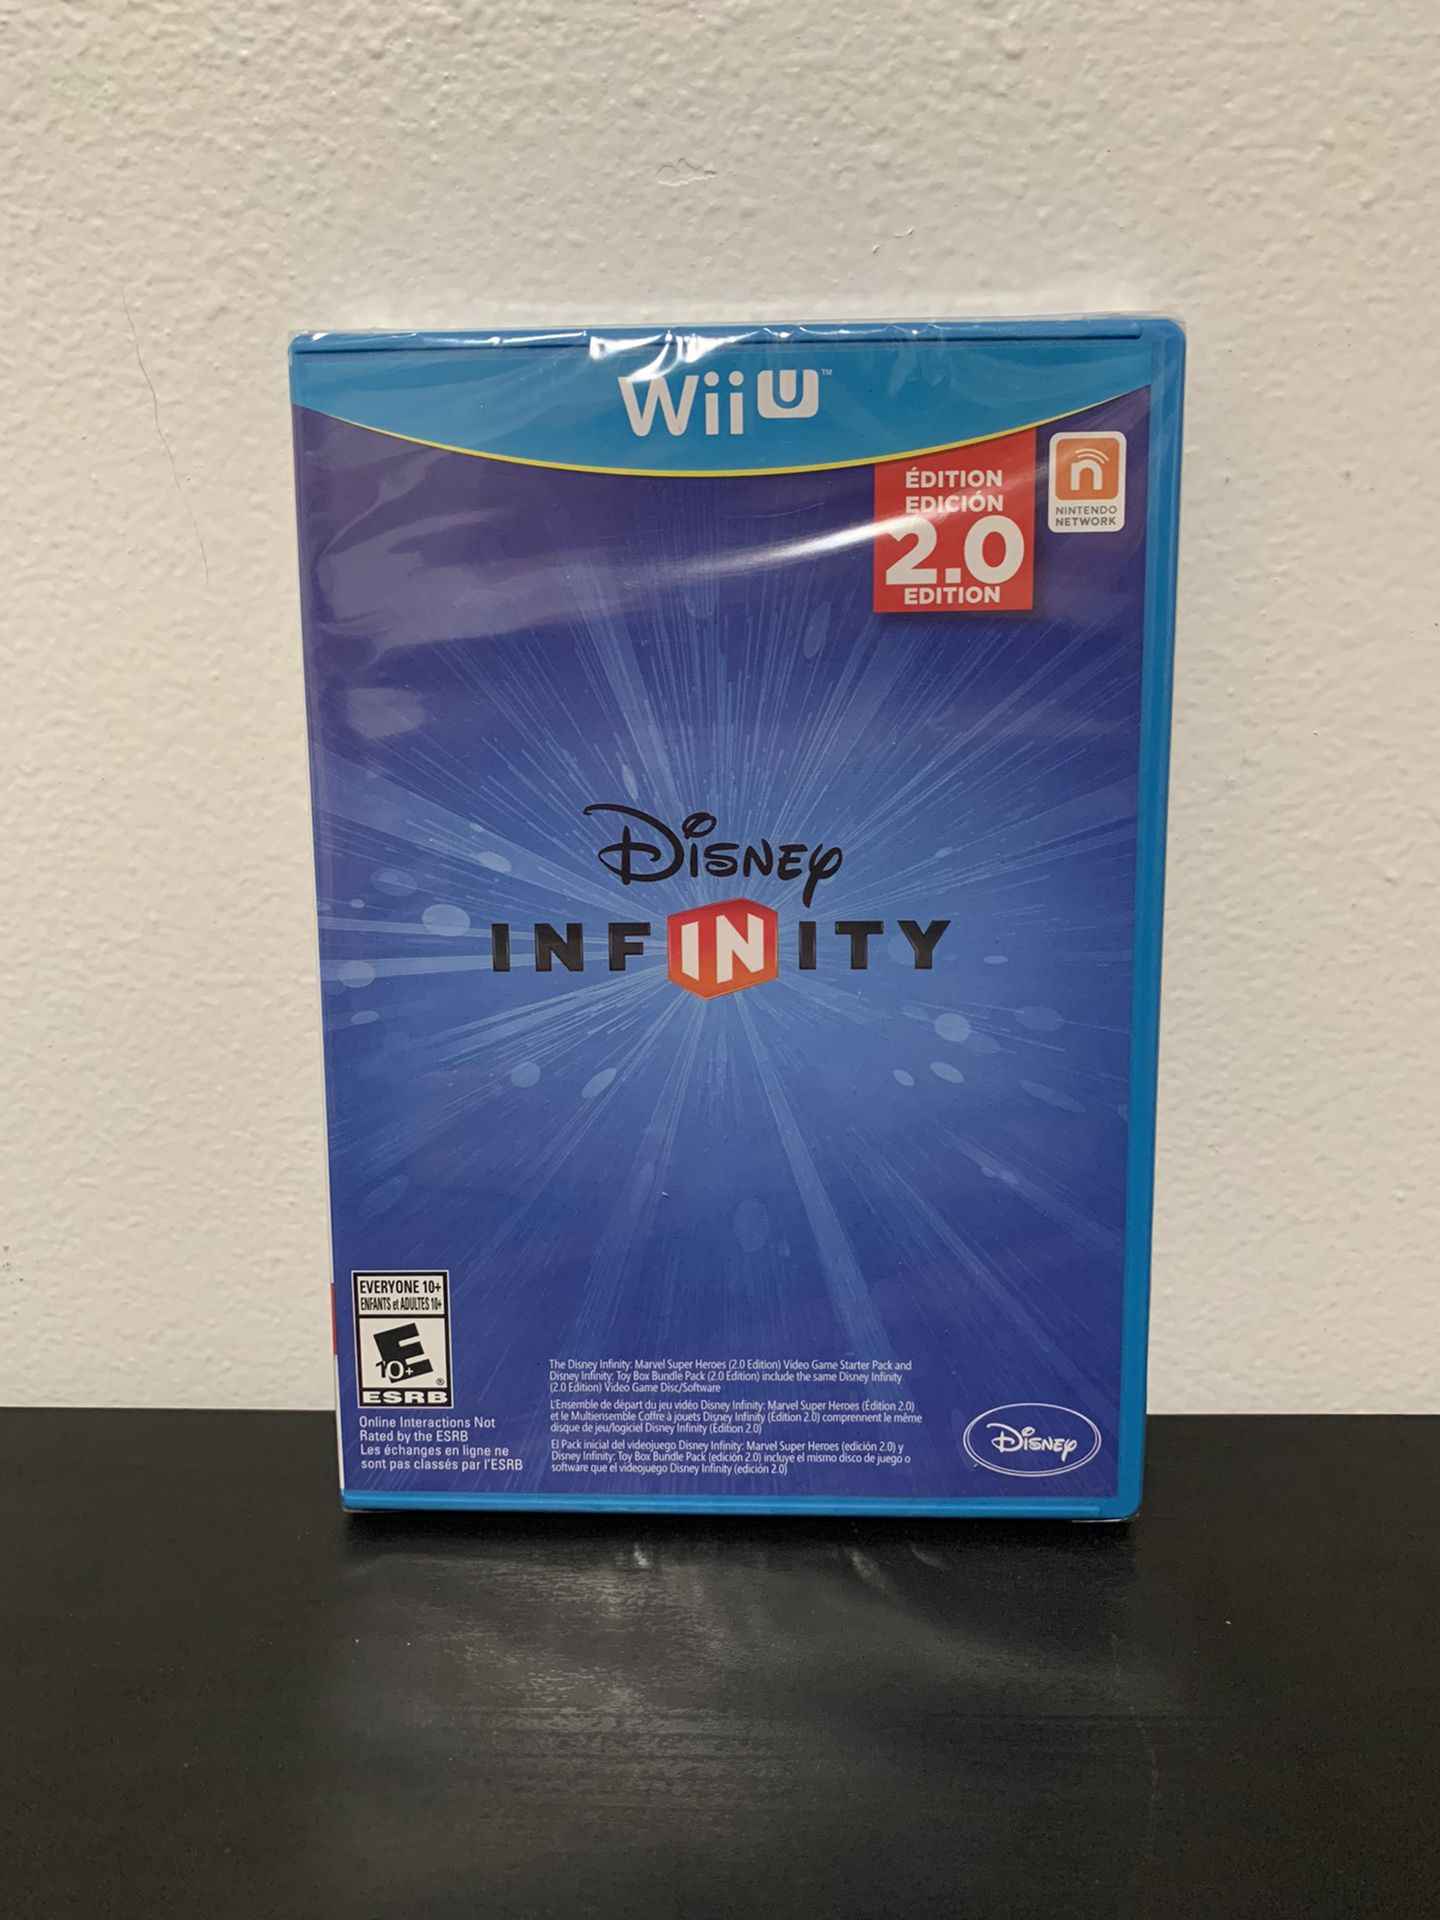 Disney Infinity 2.0 Edition - Nintendo Wii U - NEW SEALED - Video Game